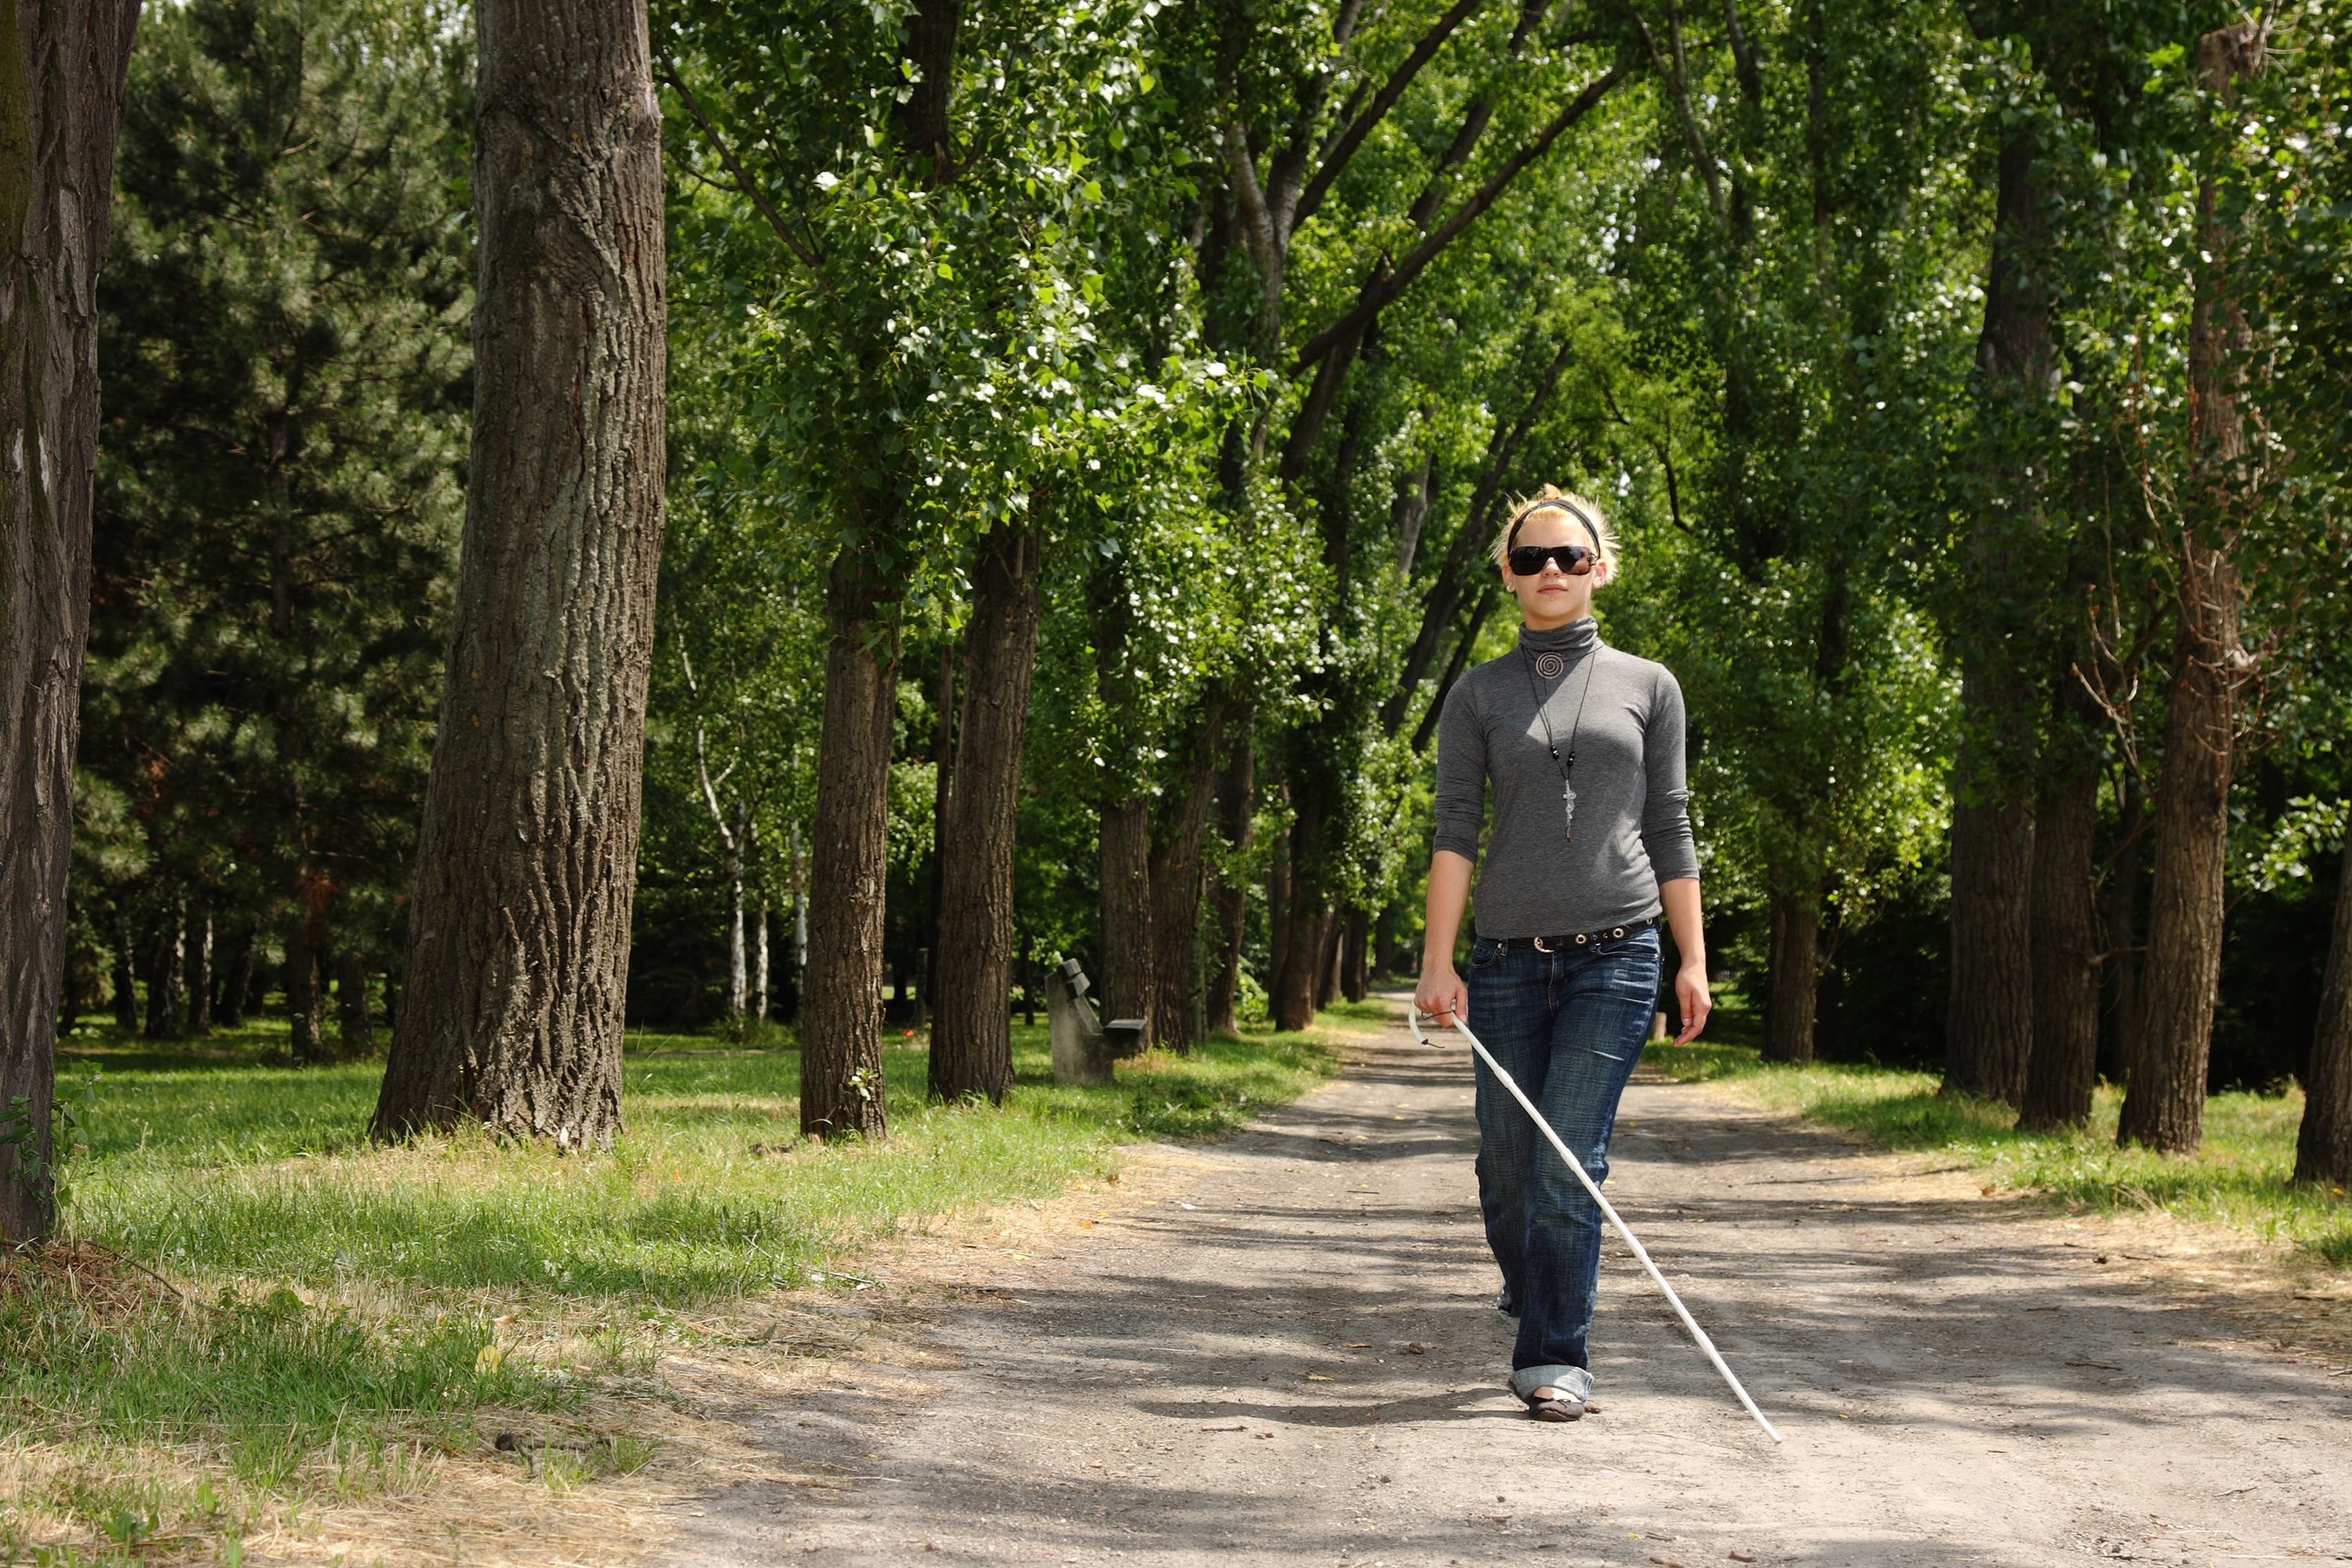 Blind Girl Walking In A Park | Source: Shutterstock